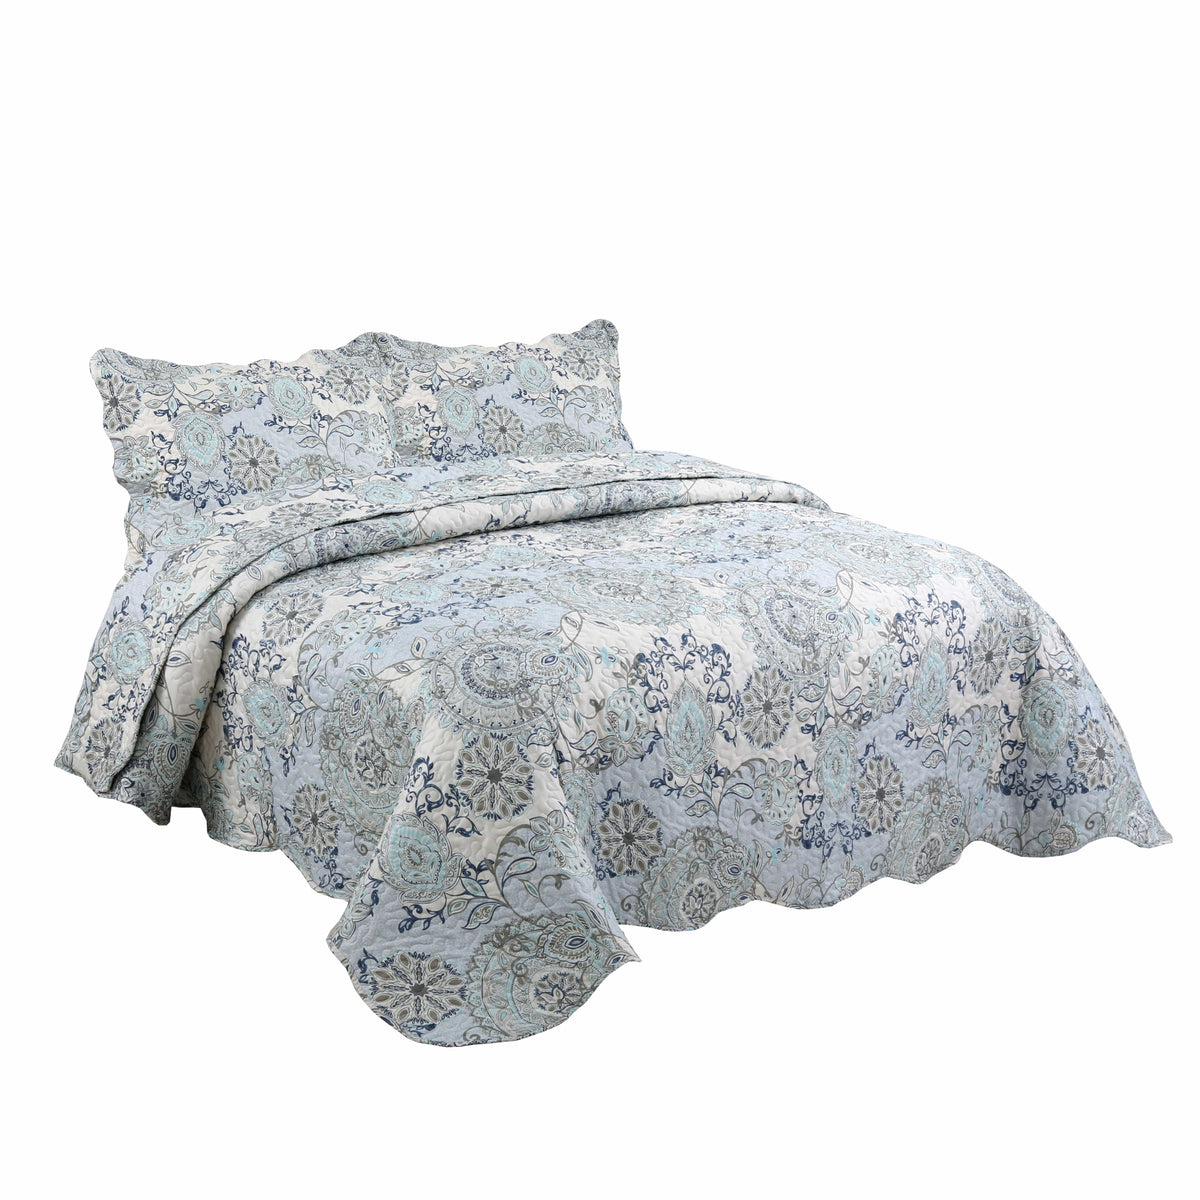 Rich Printed Stitching Coverlet Bedspread Ultra Soft, Summer Quilt Set, Blue Branch Damask Mandala Floral Pattern